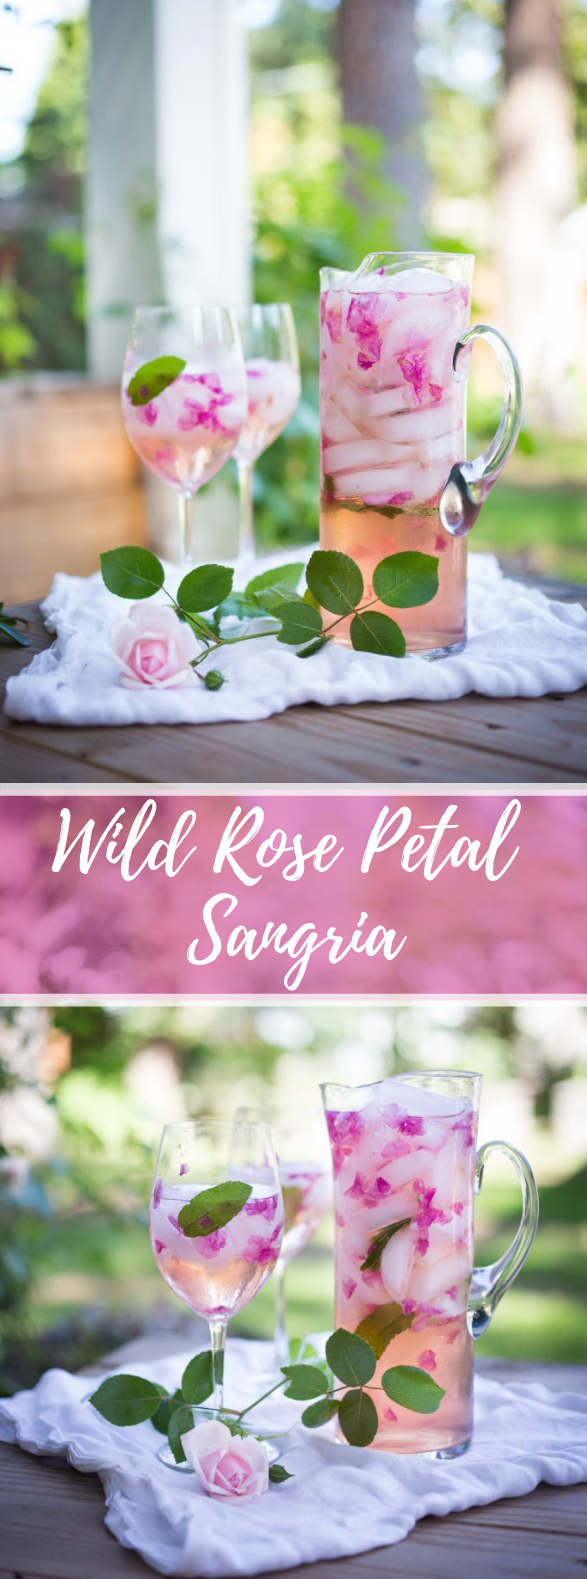 Wild Rose Petal Sangria #summerdrinks #freshdrinks